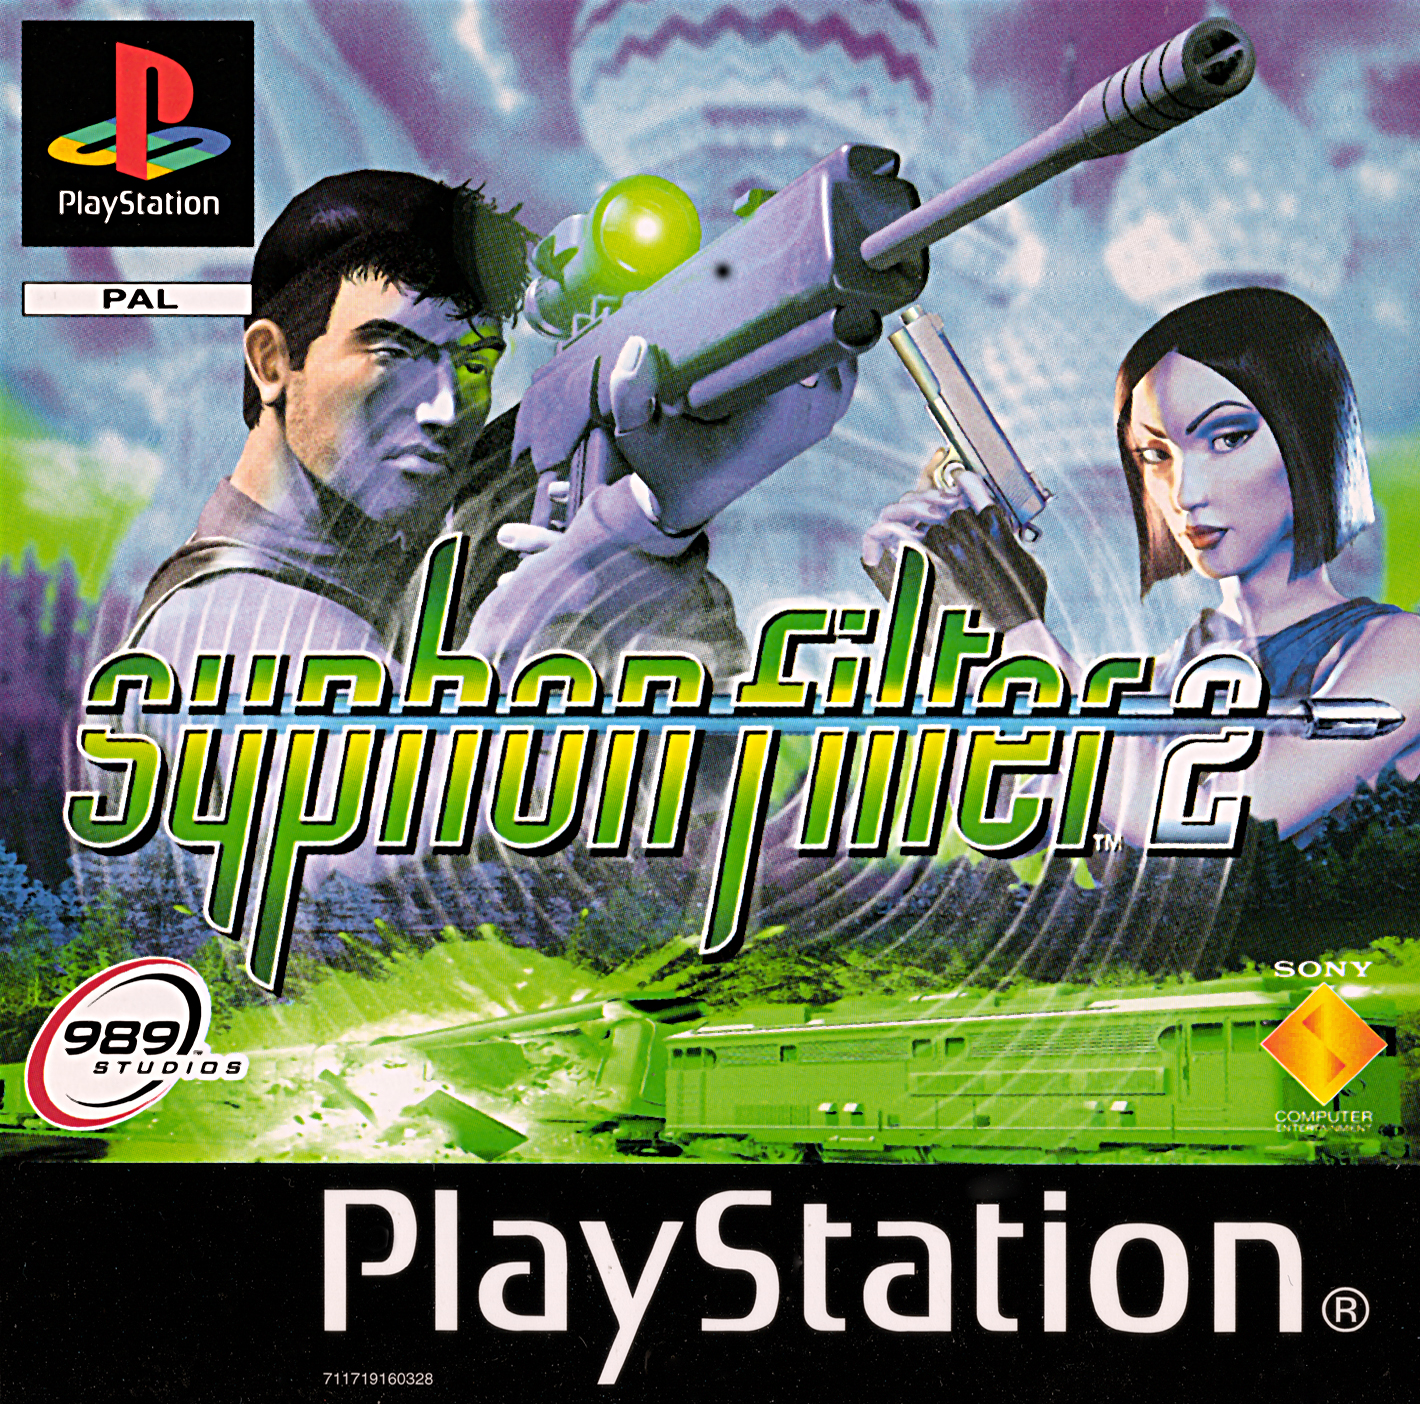 Syphon Filter Original Disc / Game for PSX / PS1 NTSC -  Hong Kong